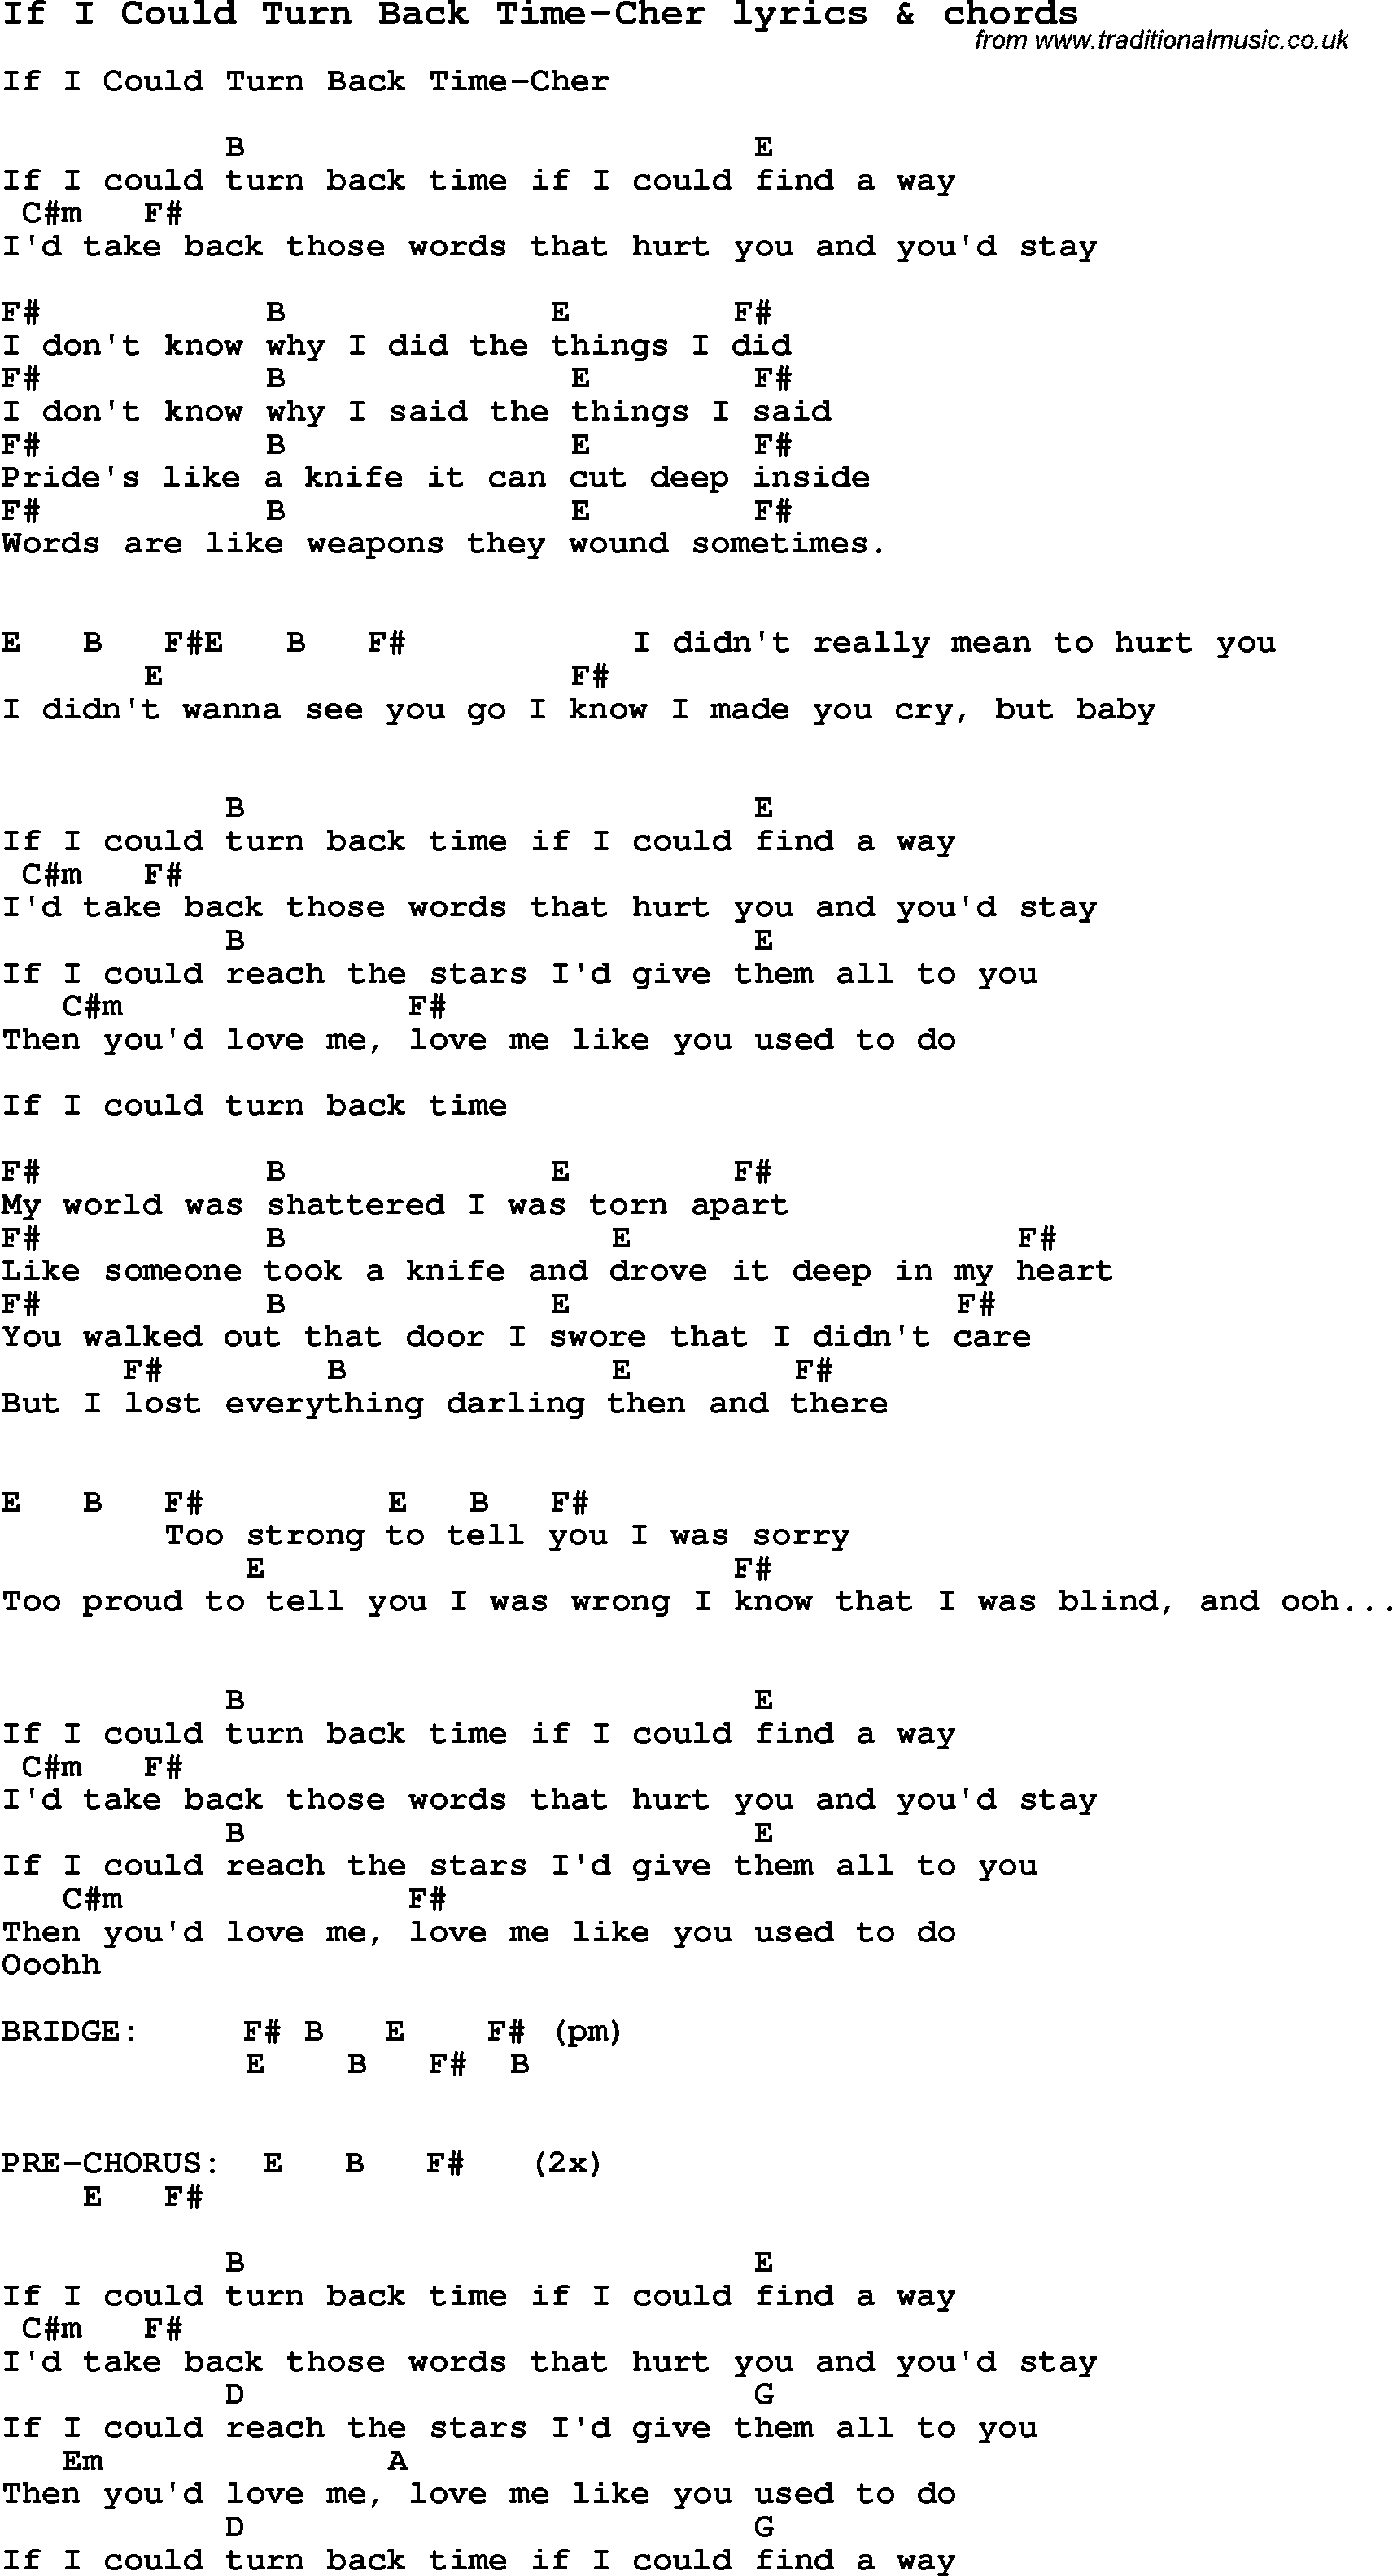 Love Song Lyrics for: If I Could Turn Back Time-Cher with chords for Ukulele, Guitar Banjo etc.